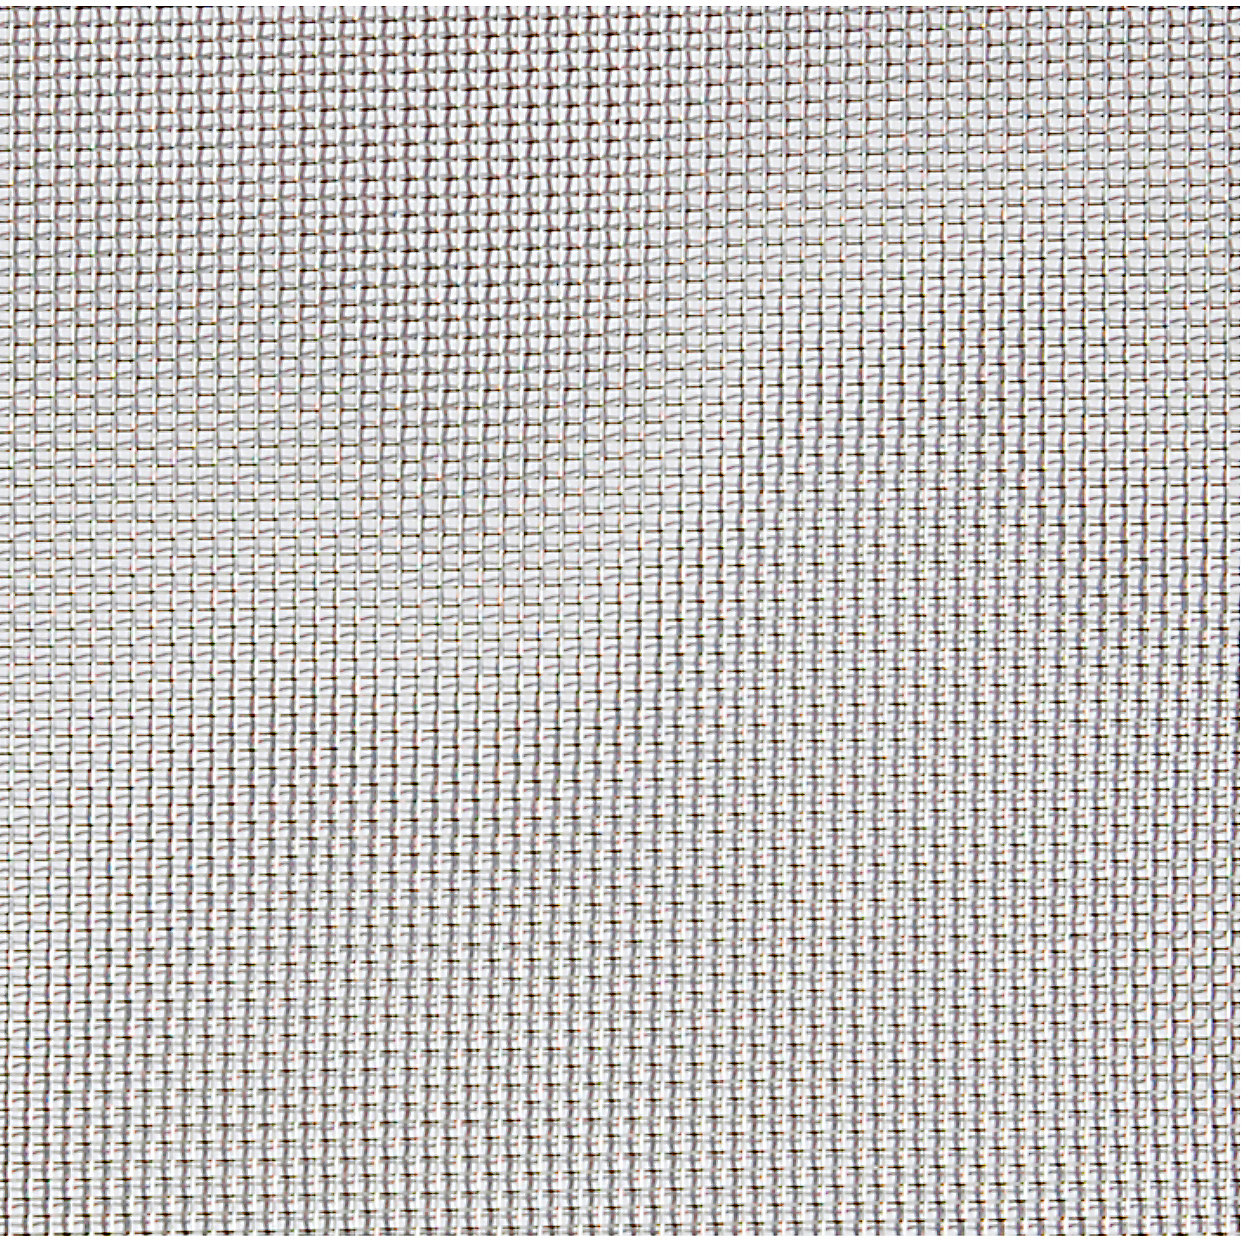 Aluminiumgewebe 18x14.009 SILBER